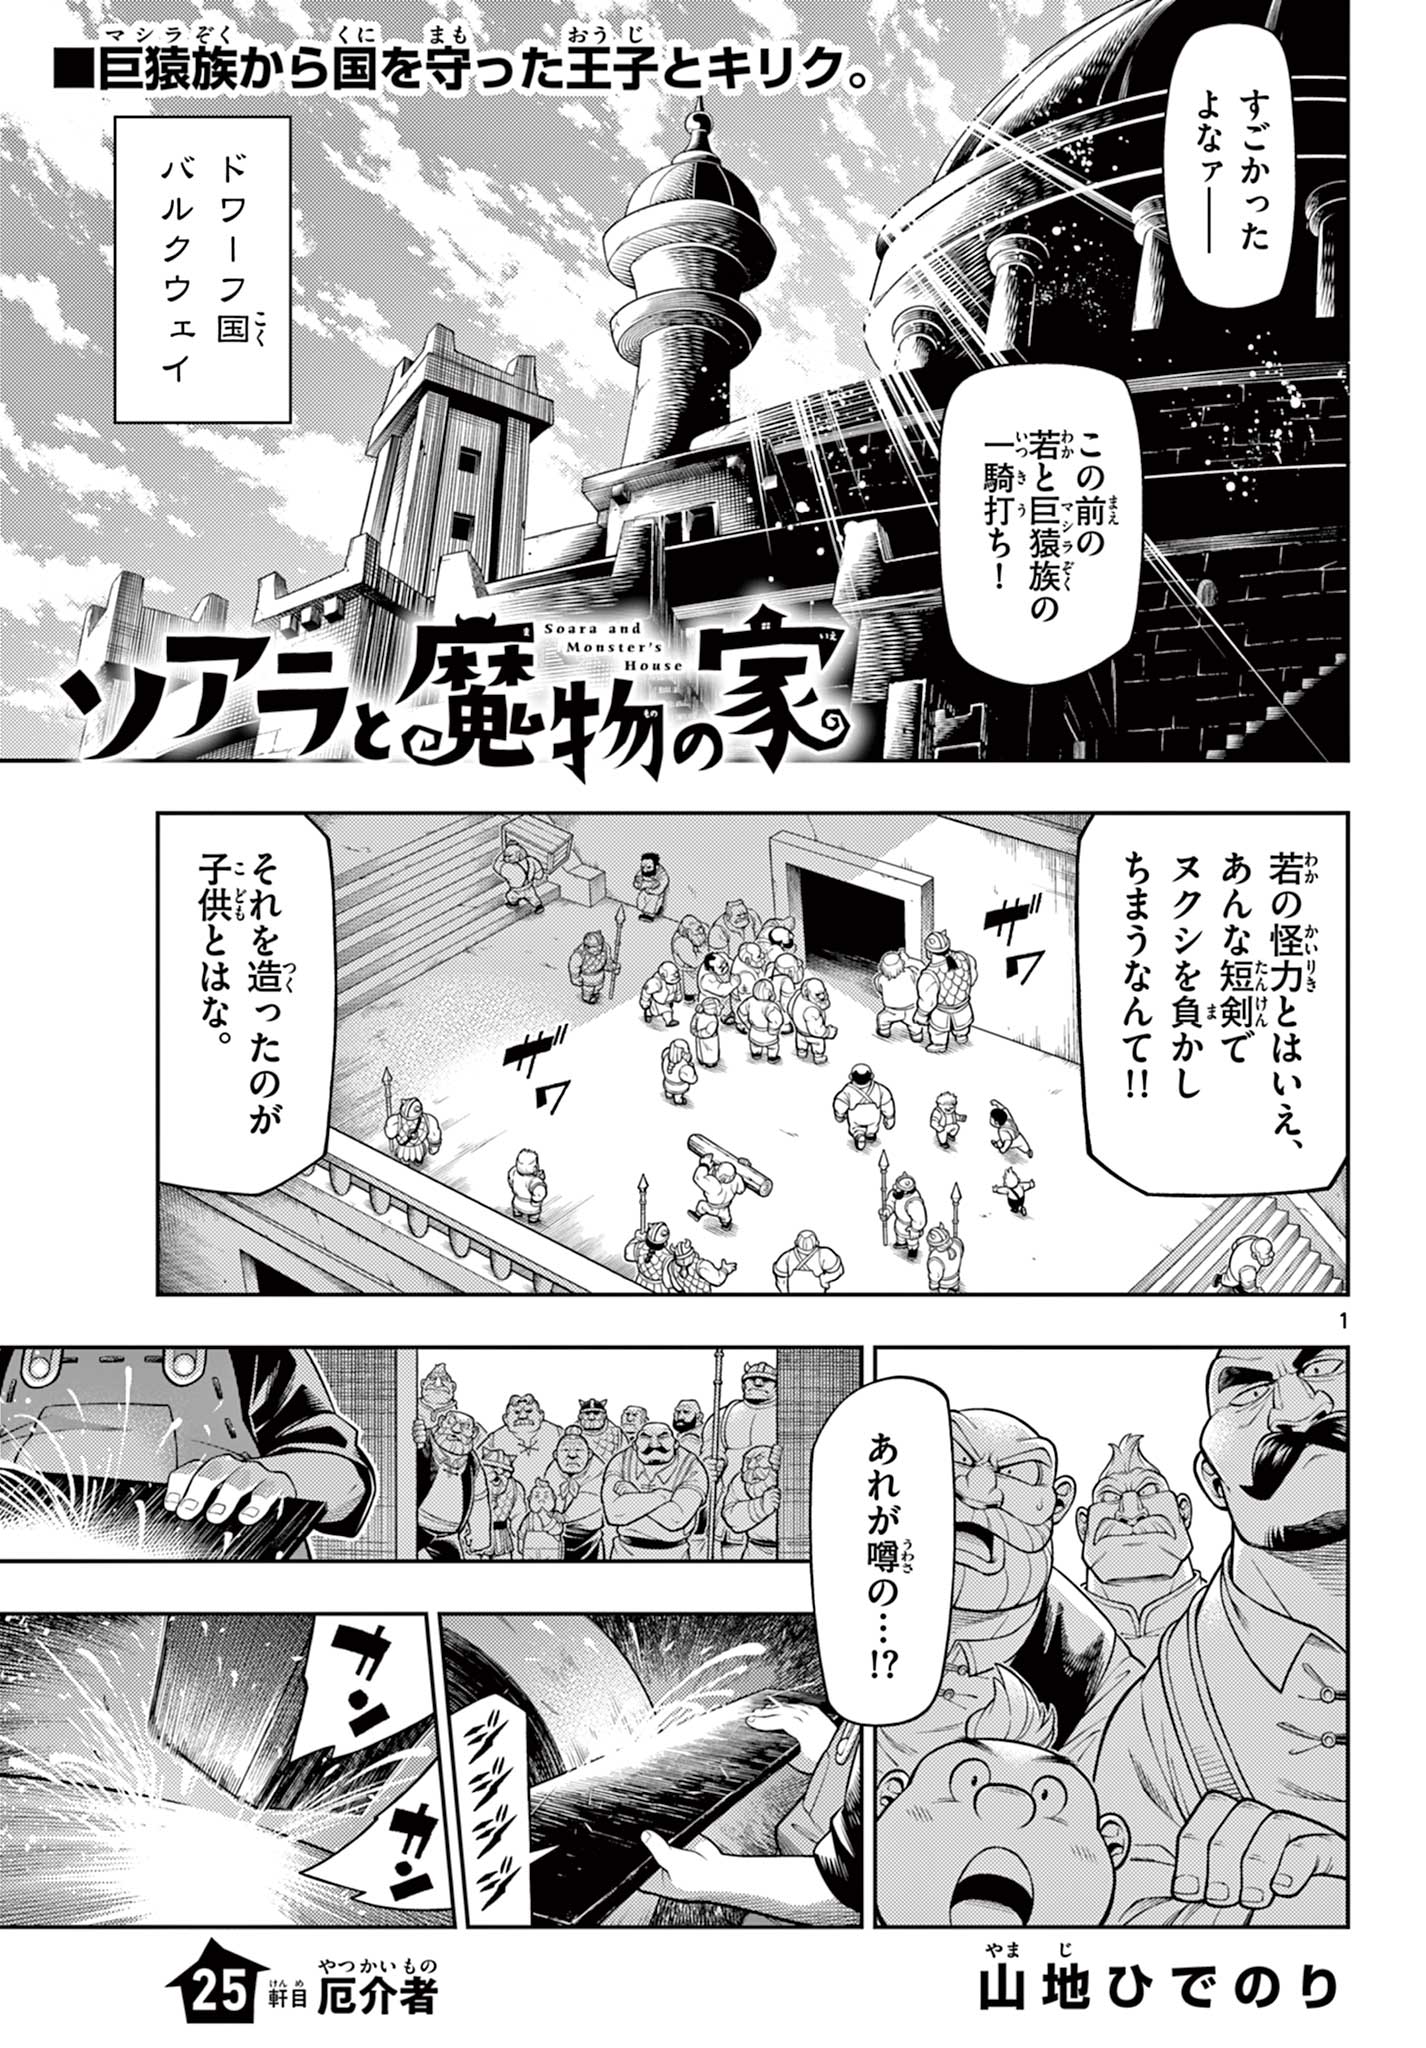 Soara to Mamono no ie - Chapter 25 - Page 1